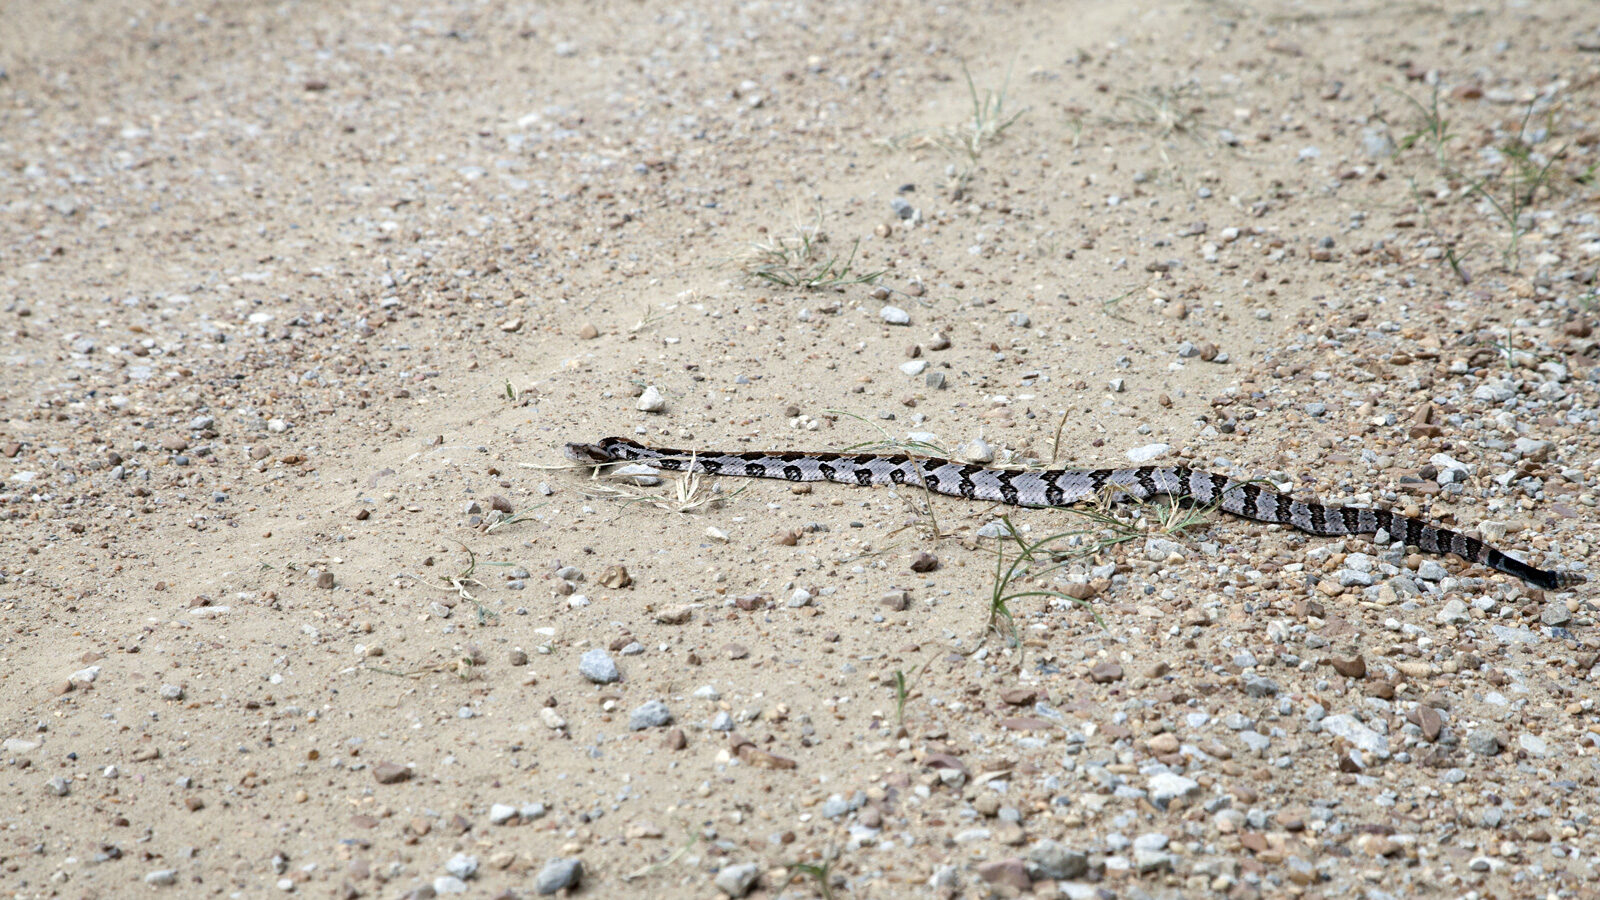 Timber rattlesnake on rocky ground